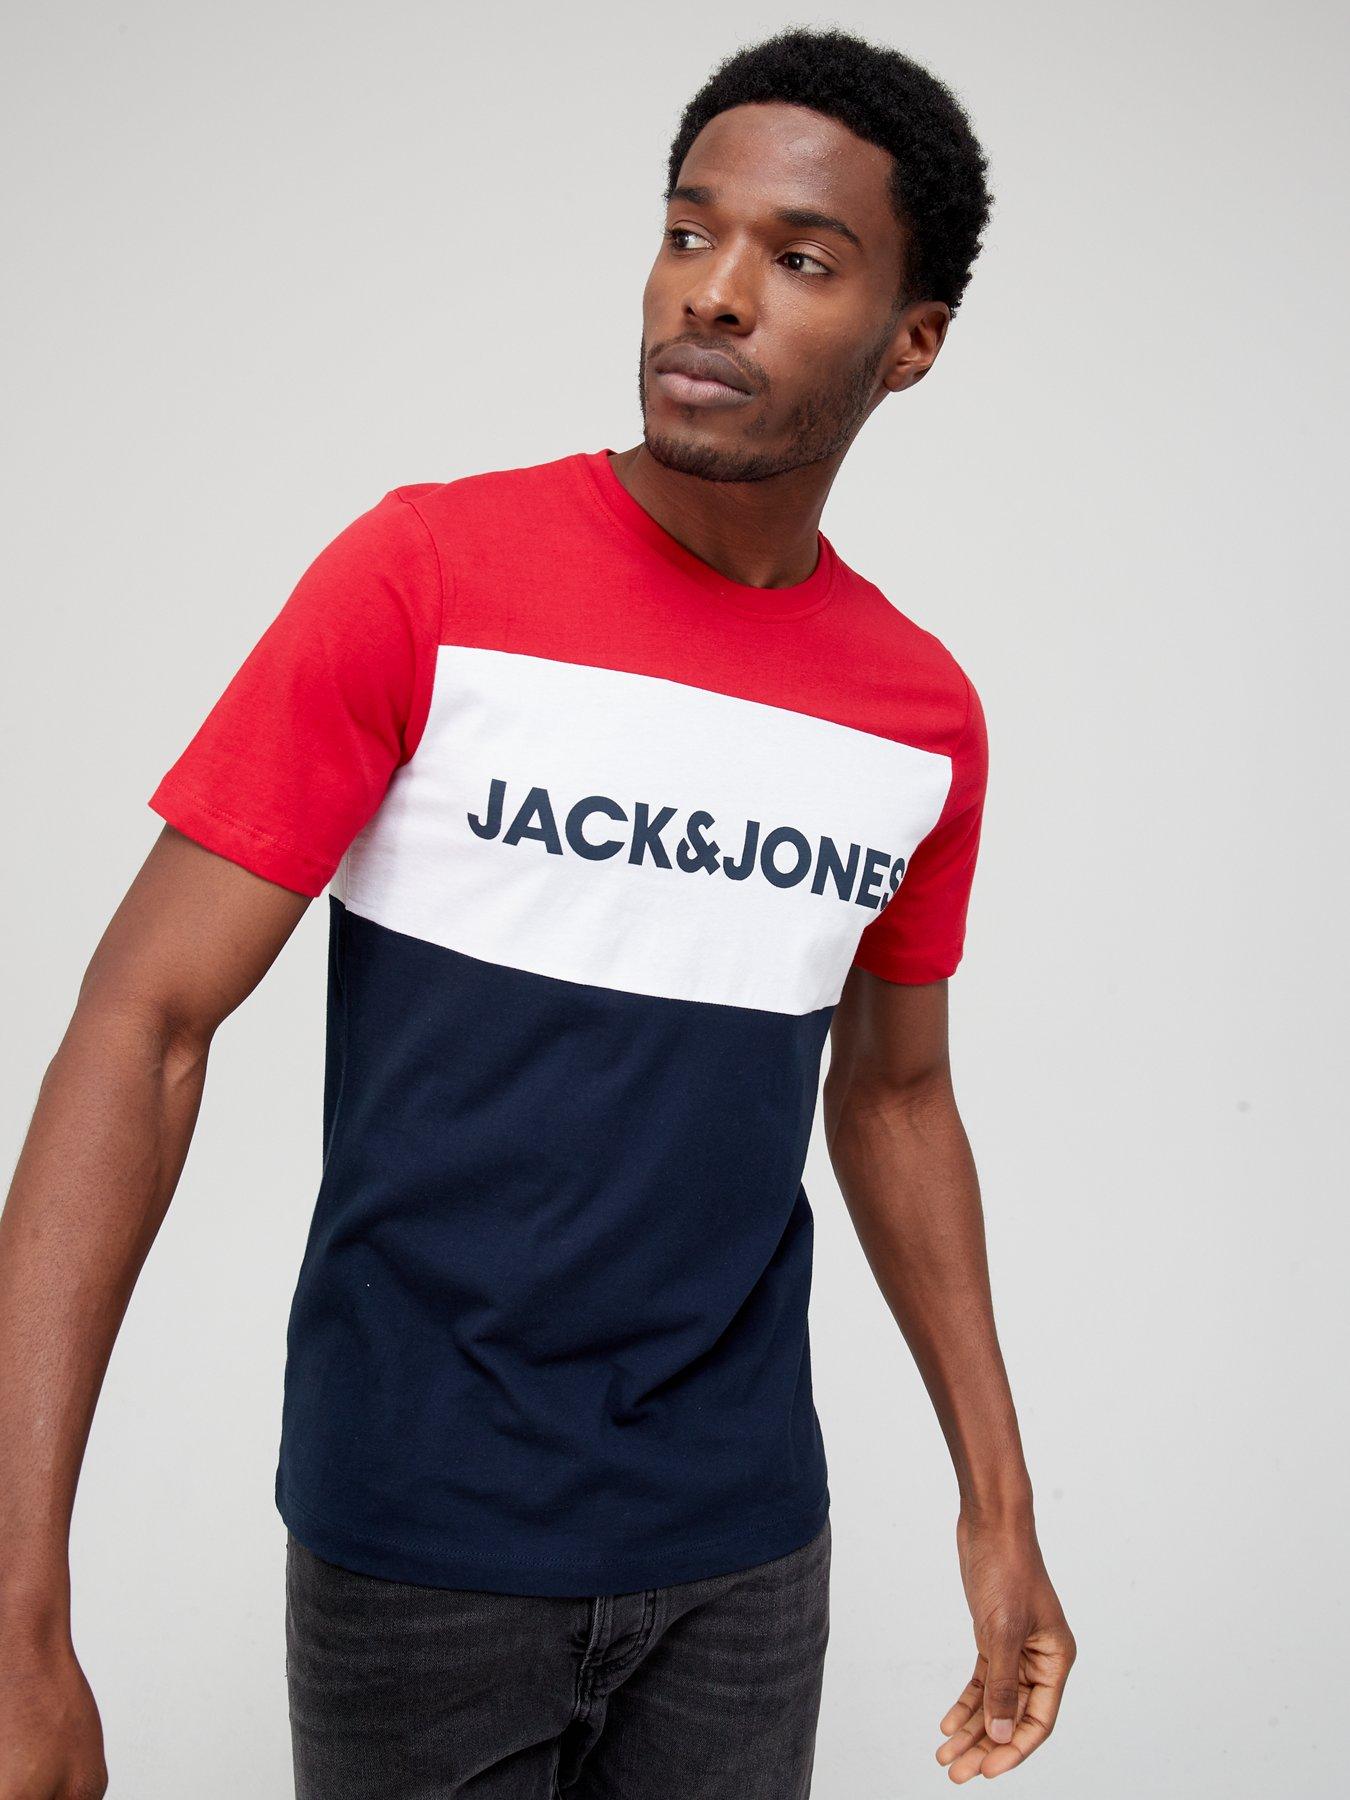 Details about   Jack & Jones Mens S/S Crew Neck T-Shirts 2-Pack 